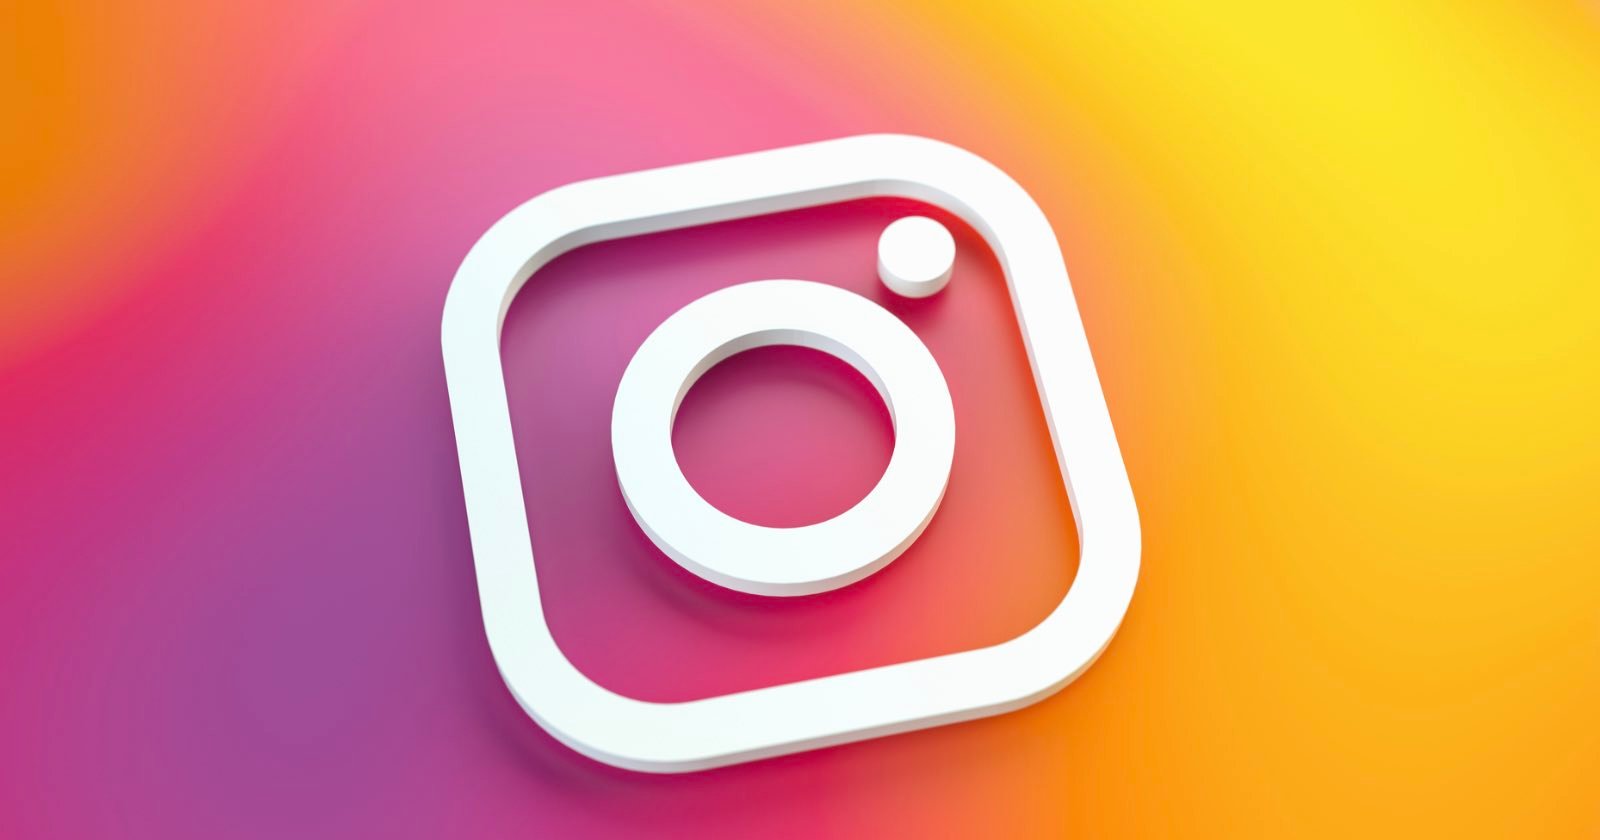  instagram let users share short video status updates 